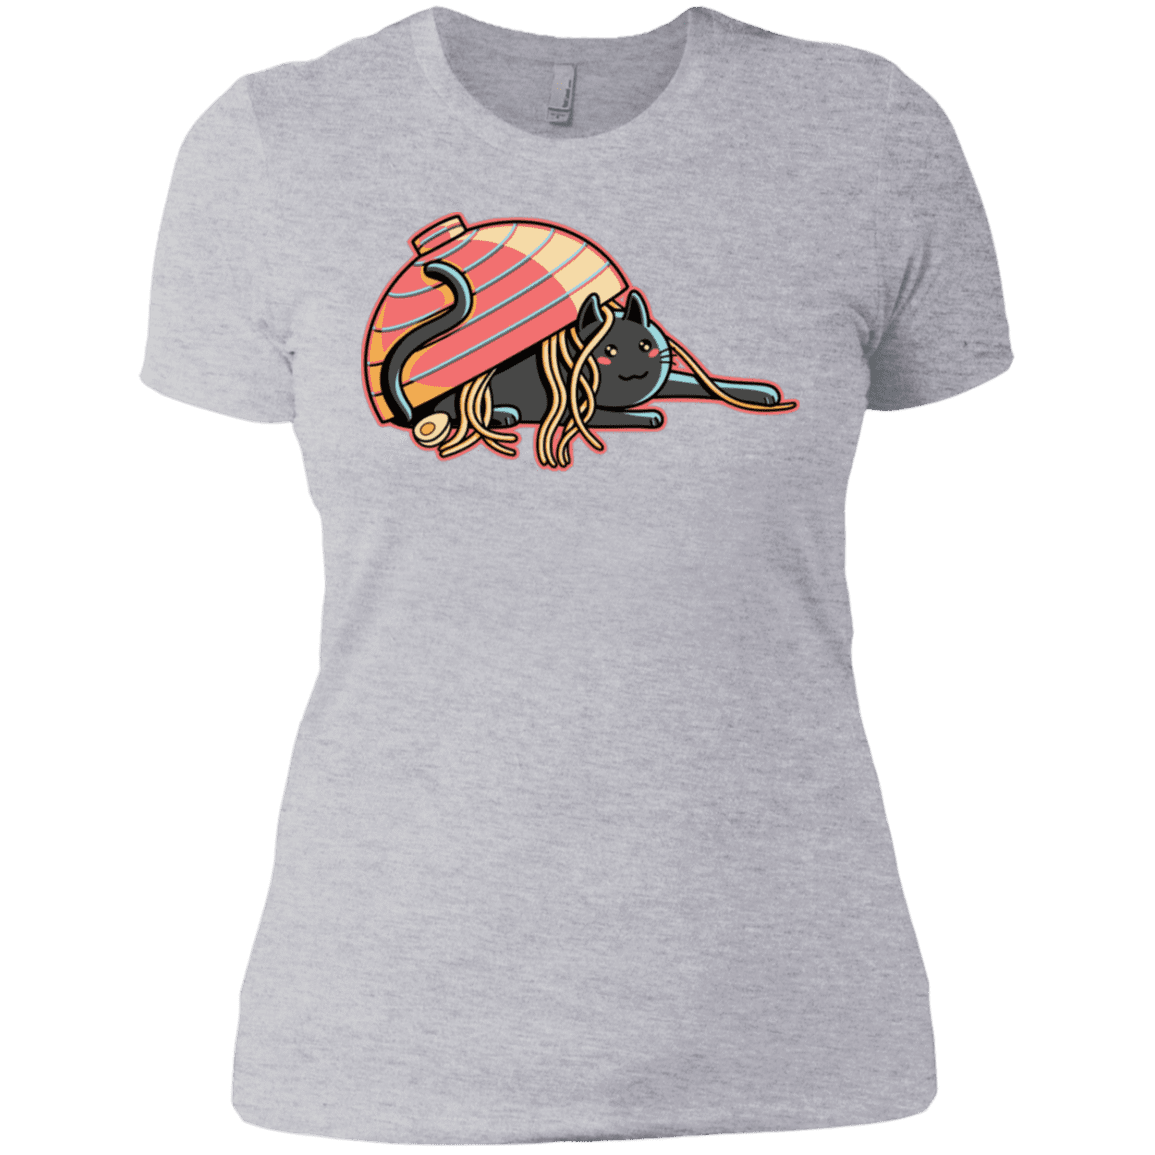 T-Shirts Heather Grey / X-Small Ramen Loving Cat Women's Premium T-Shirt